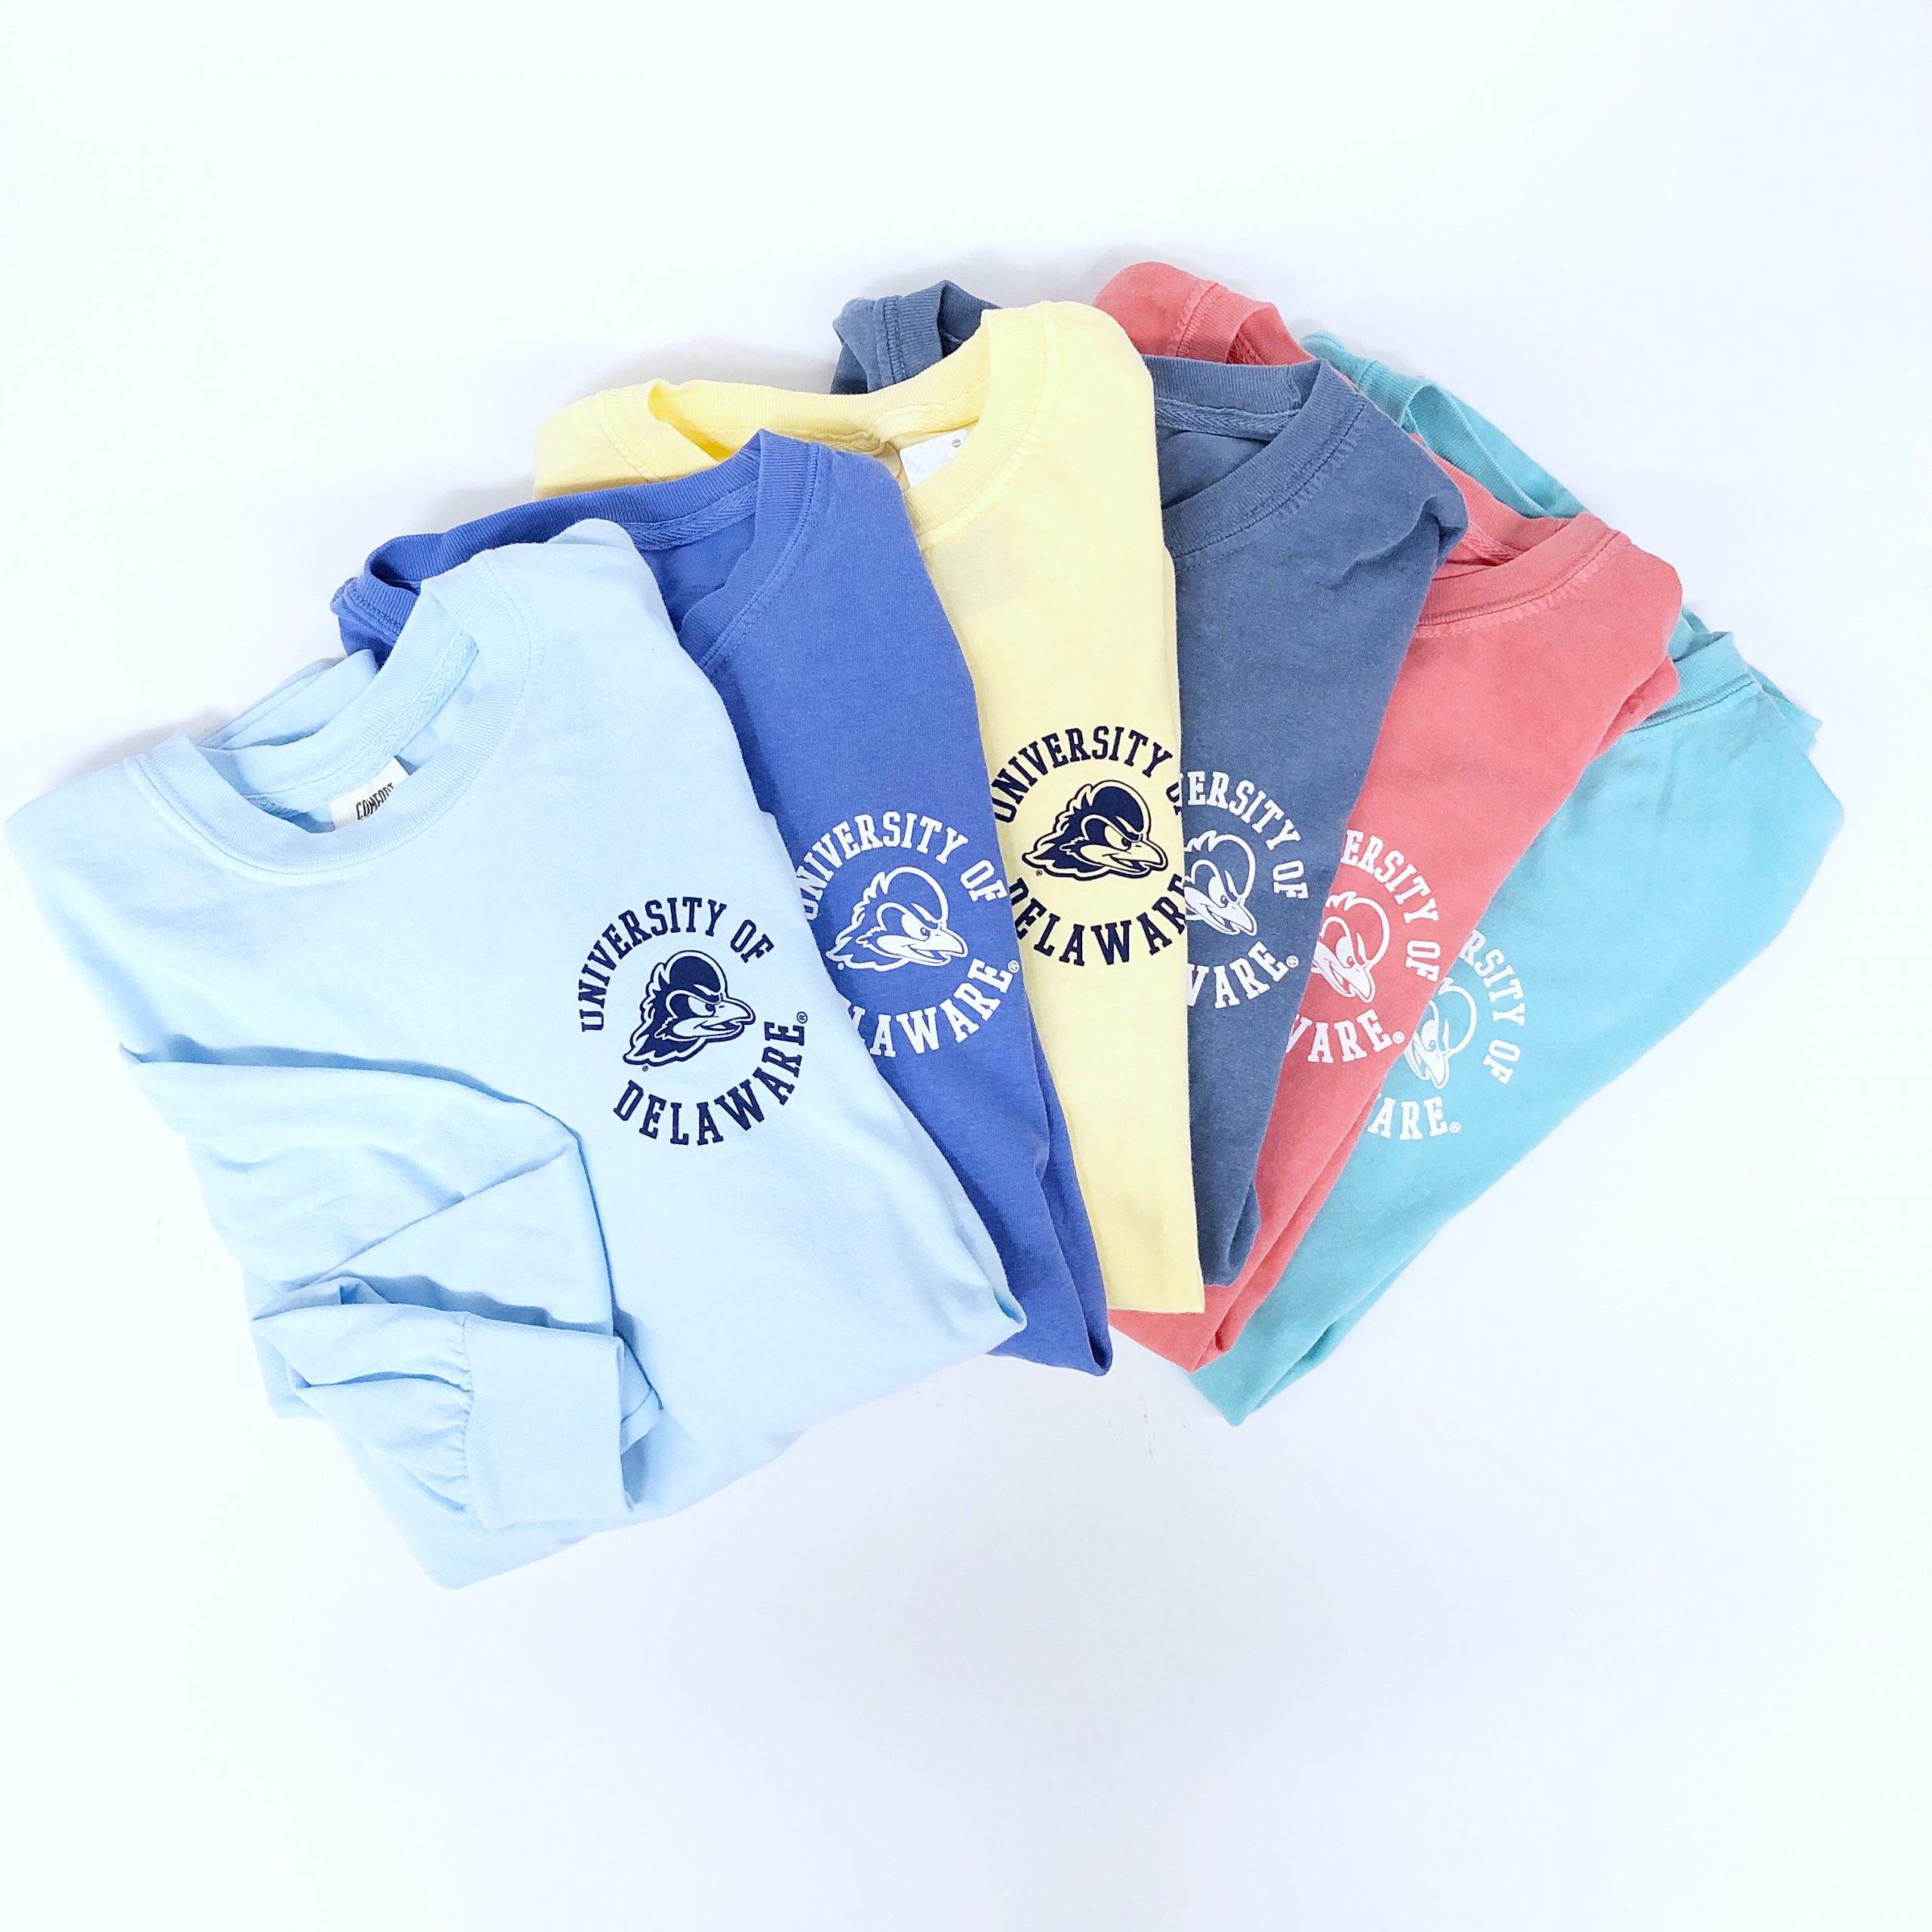 Sunny and Melon r Kids Size Tee Shirt T-shirt Soft 